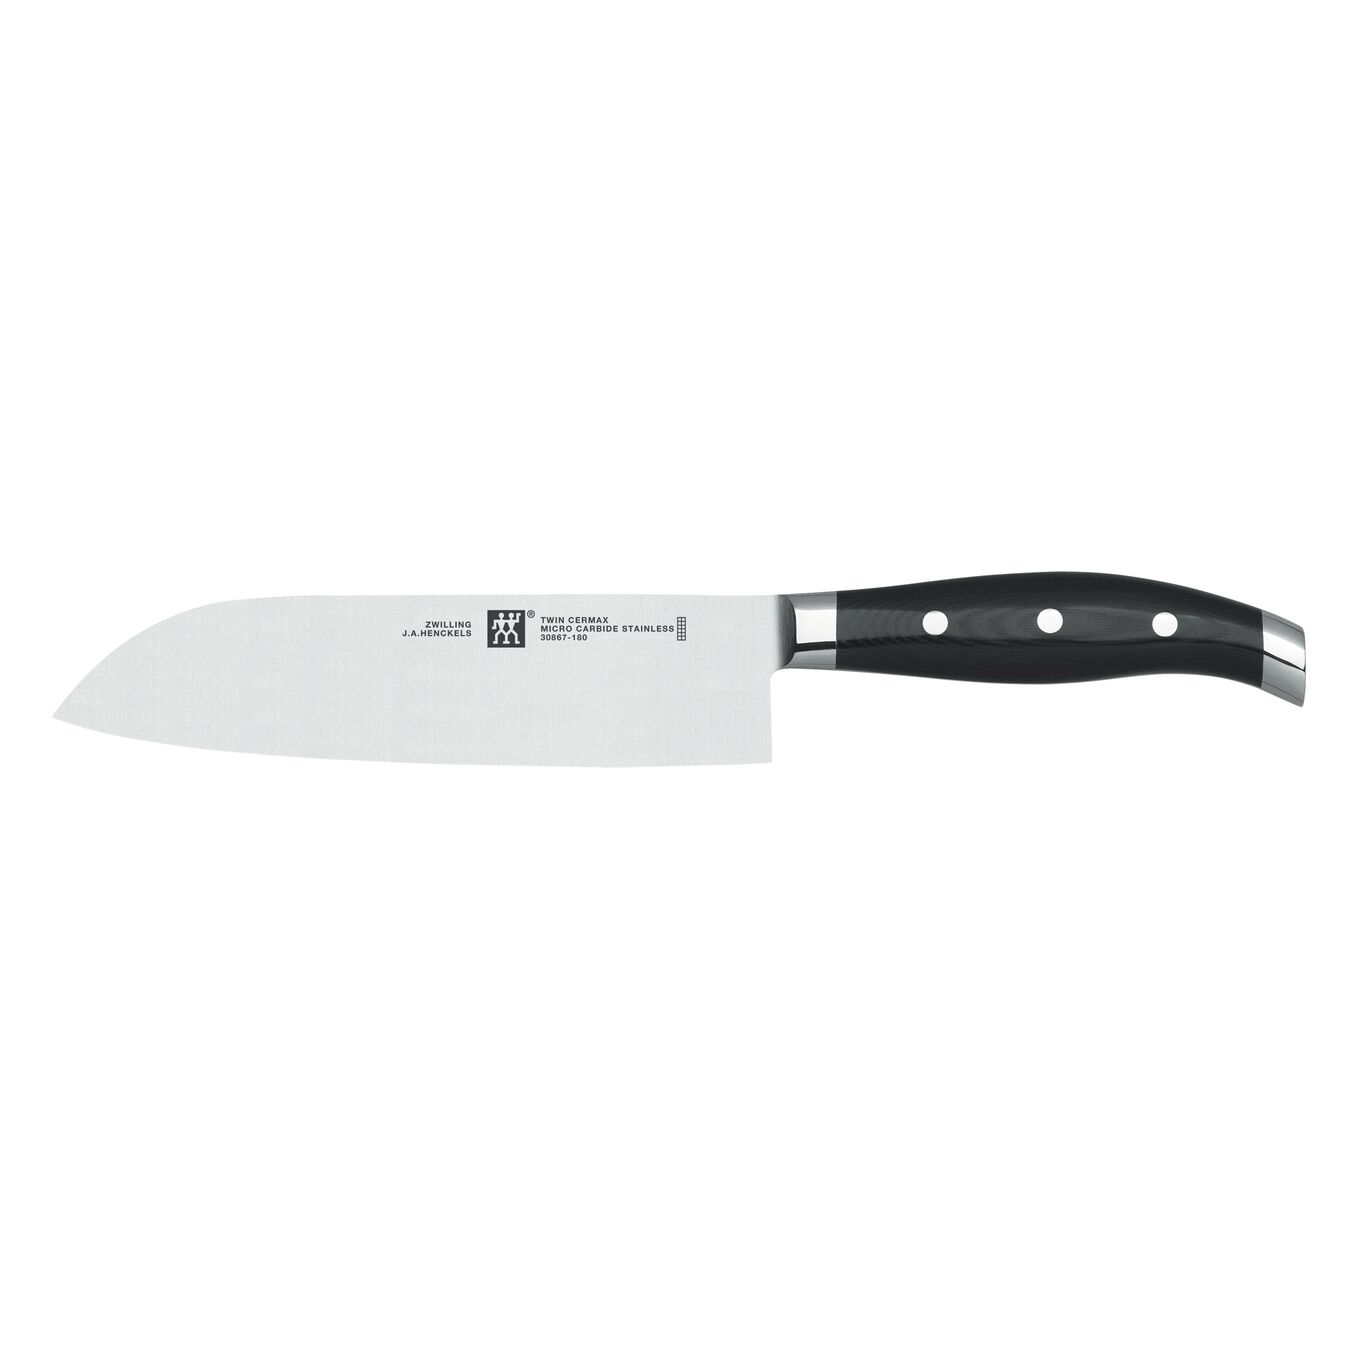 Couteau santoku 18 cm, Micarta,,large 2